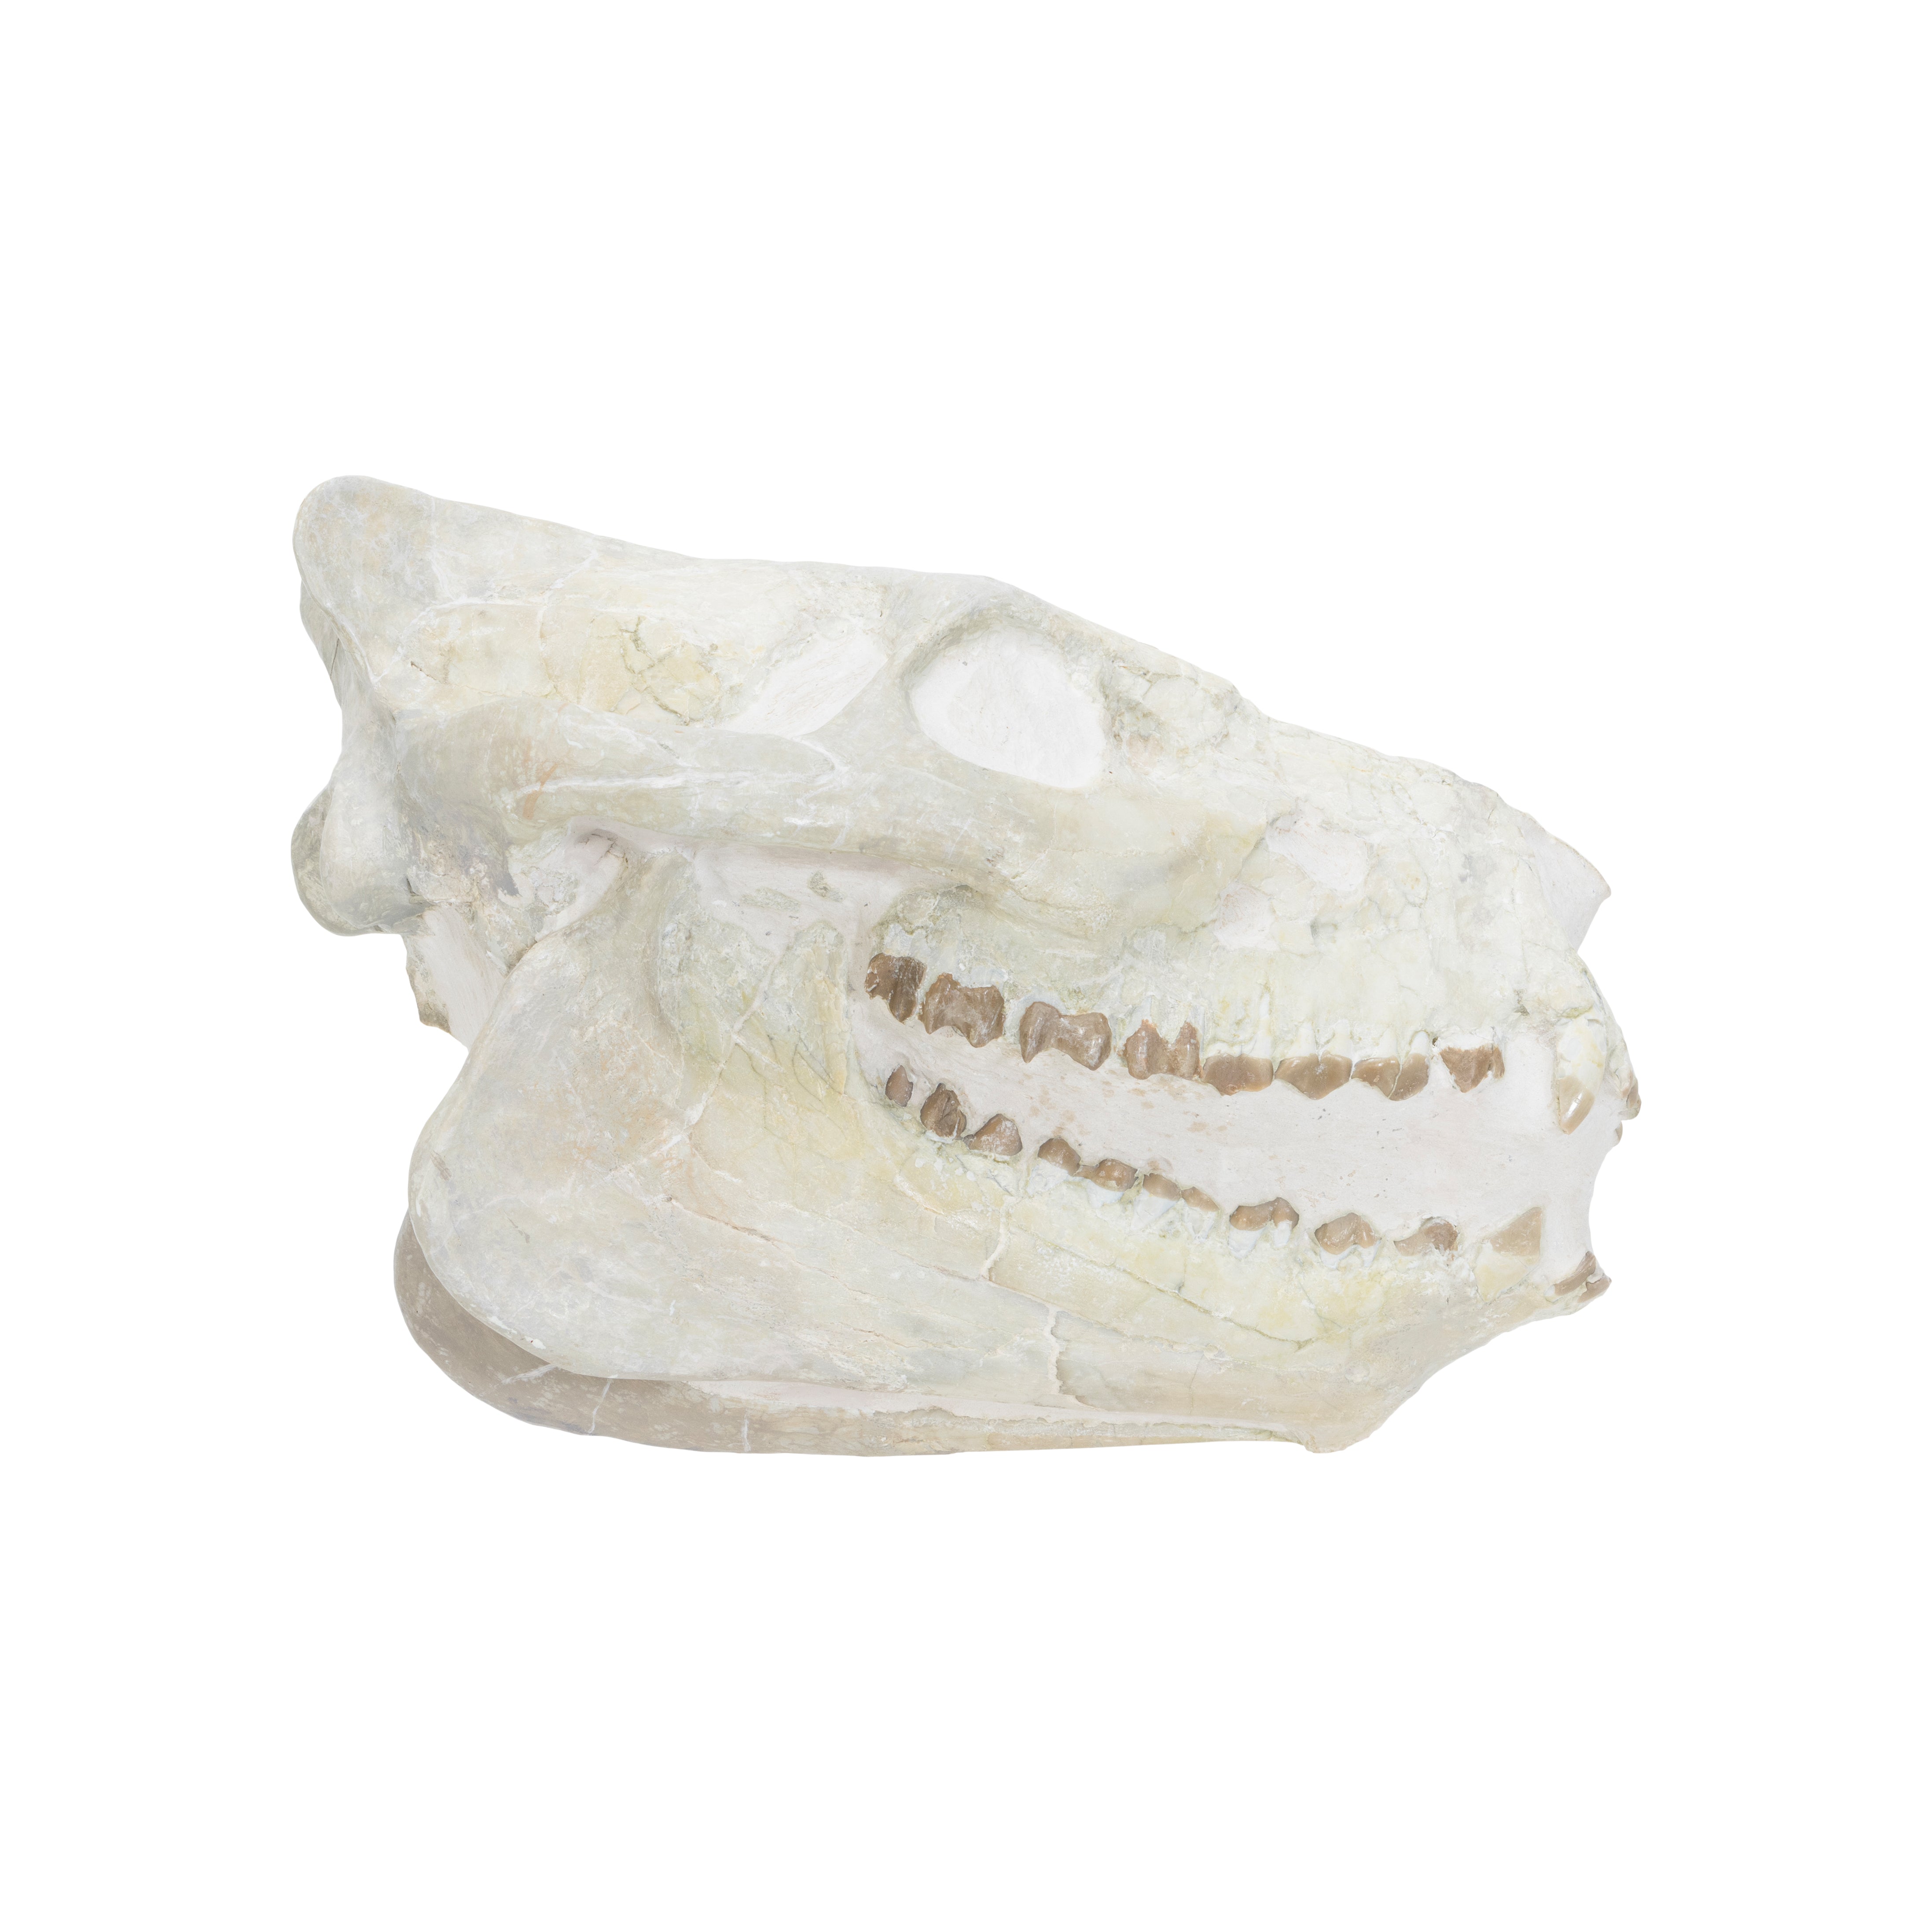 Merycoidodontid Culbertson Oreodont Skull Fossil